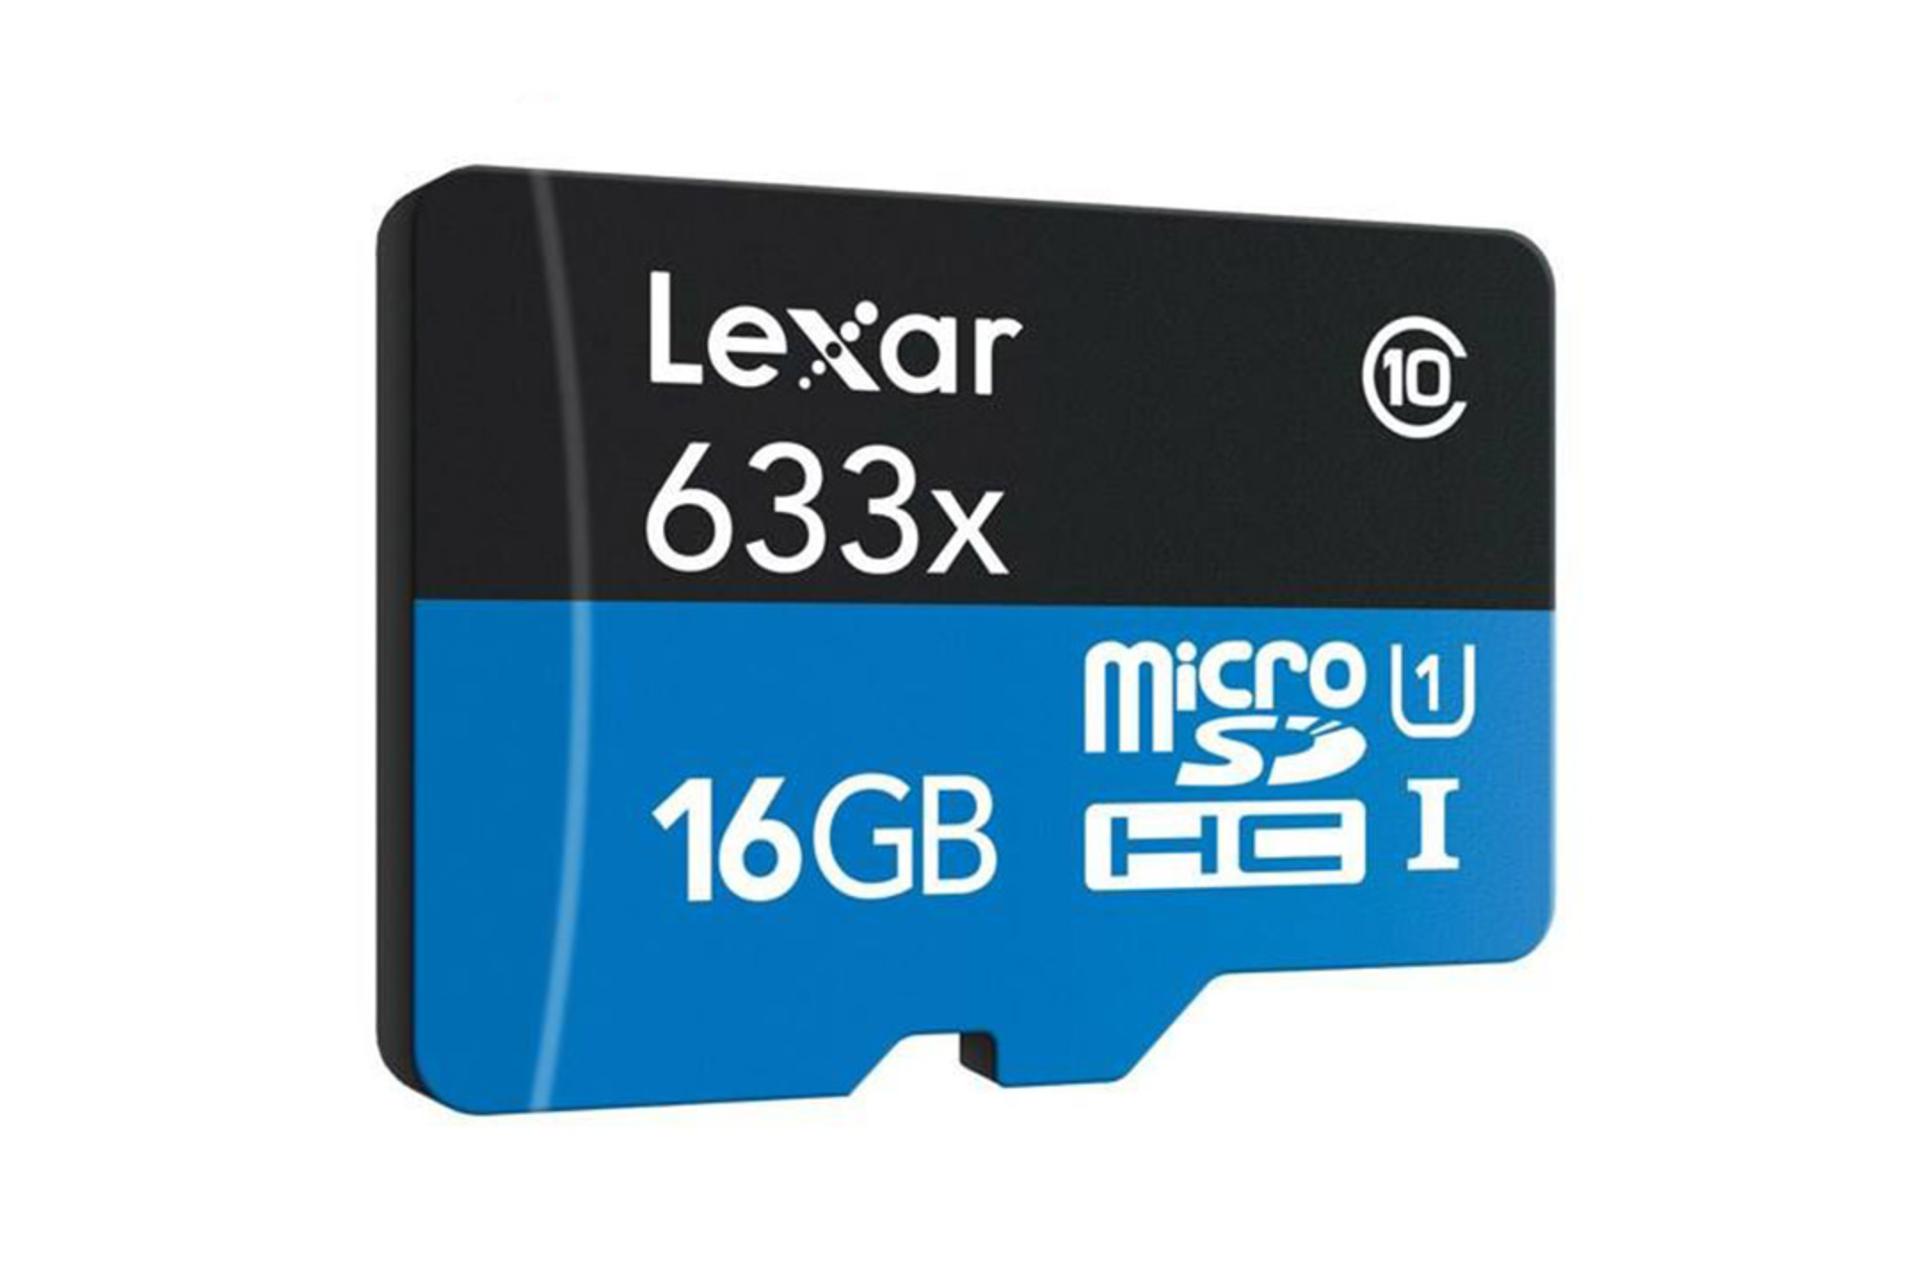 Lexar High Performance microSDHC Class 10 UHS-I U1 16GB